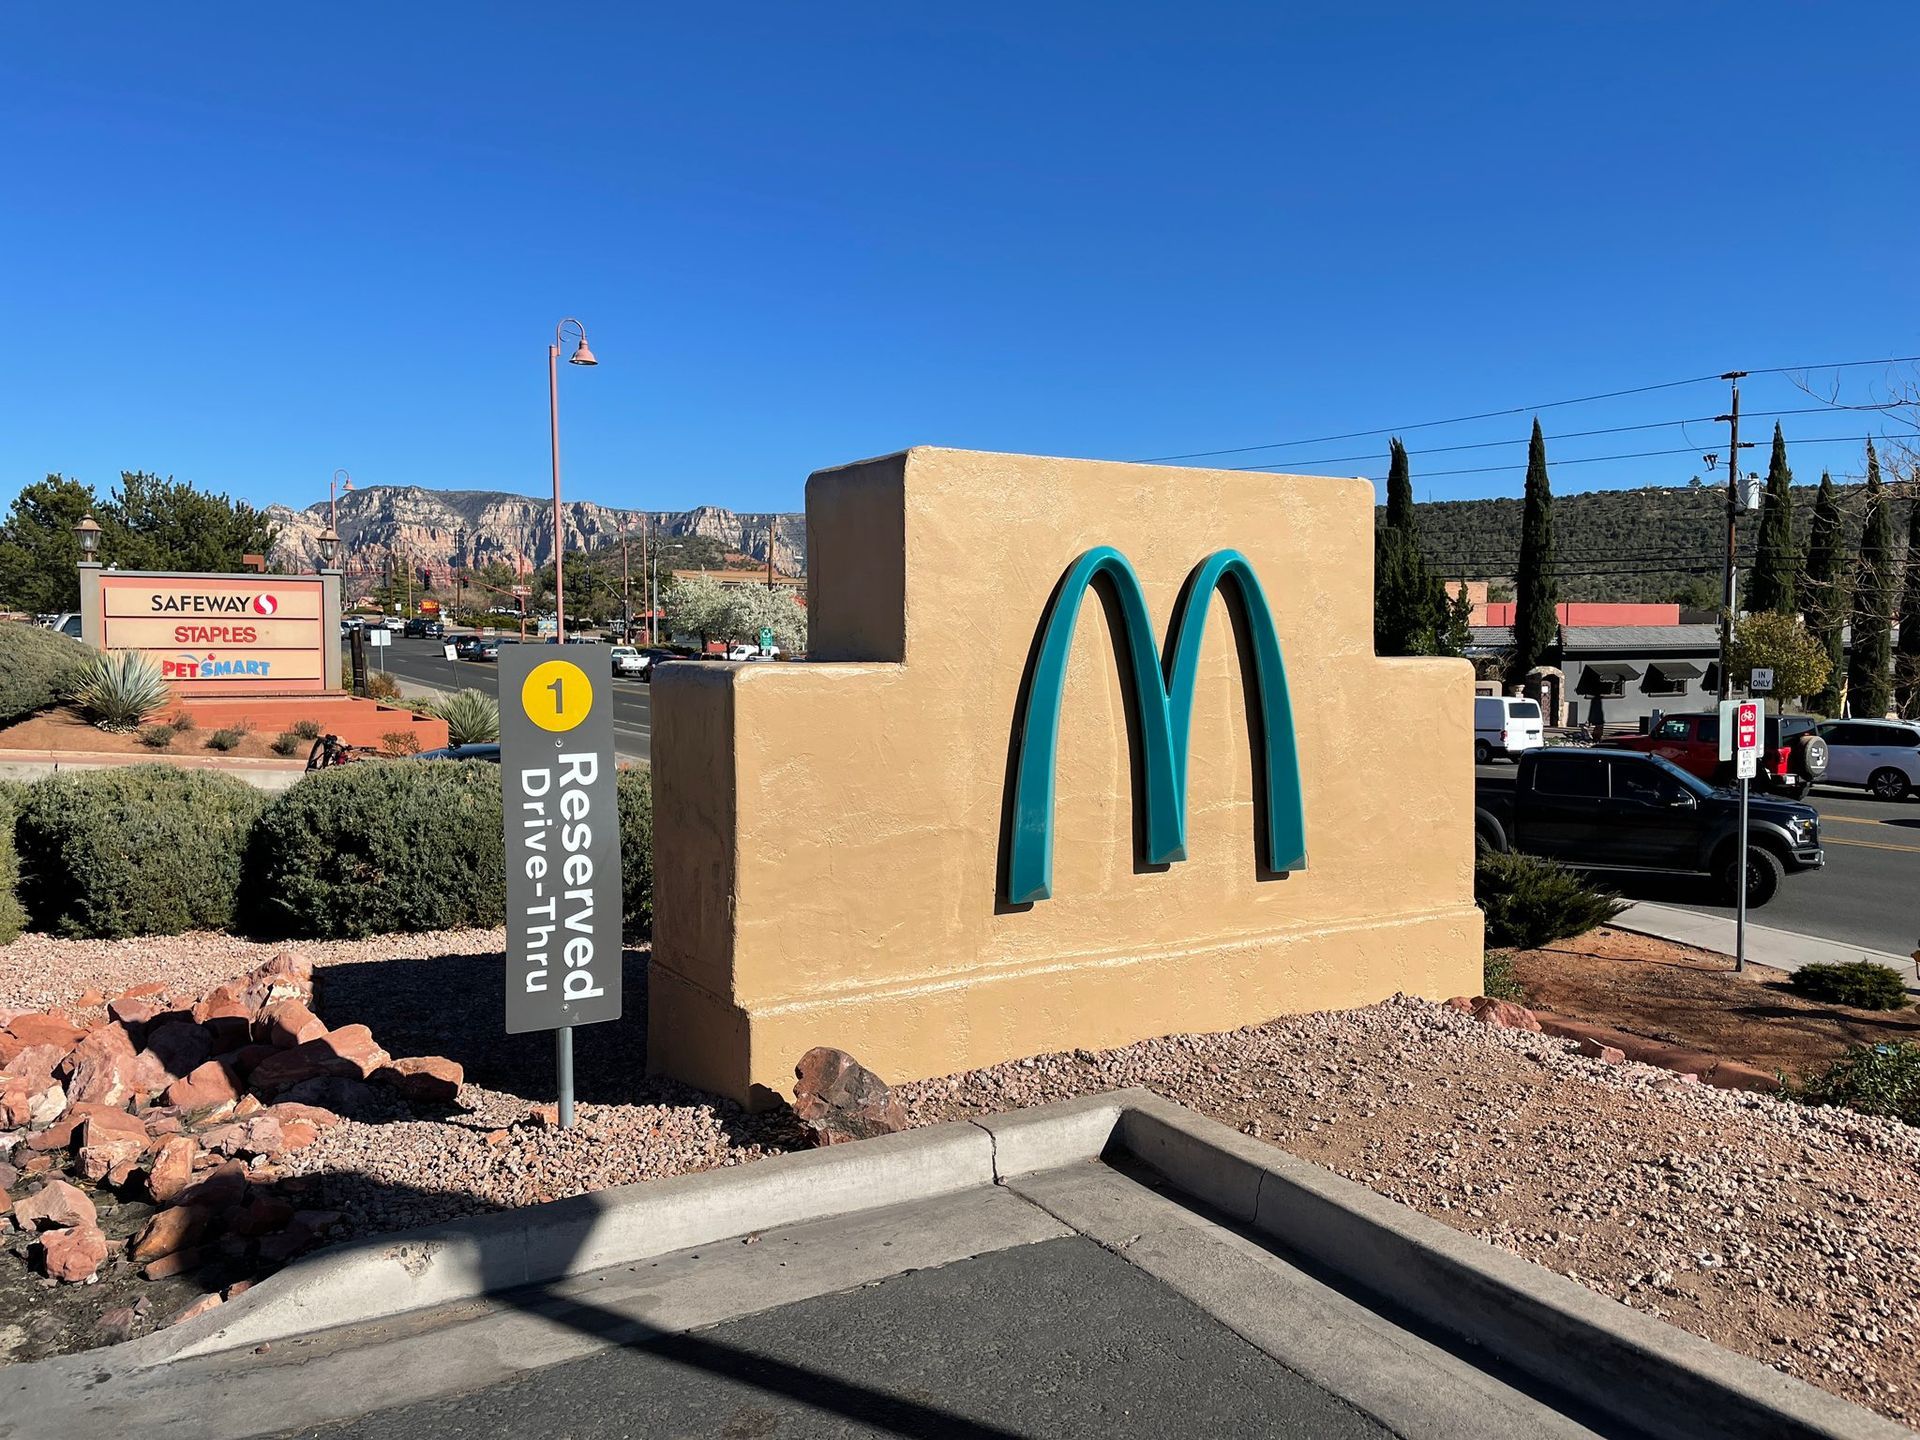 World's First Teal McDonald's Arches: world record in Sedona, Arizona